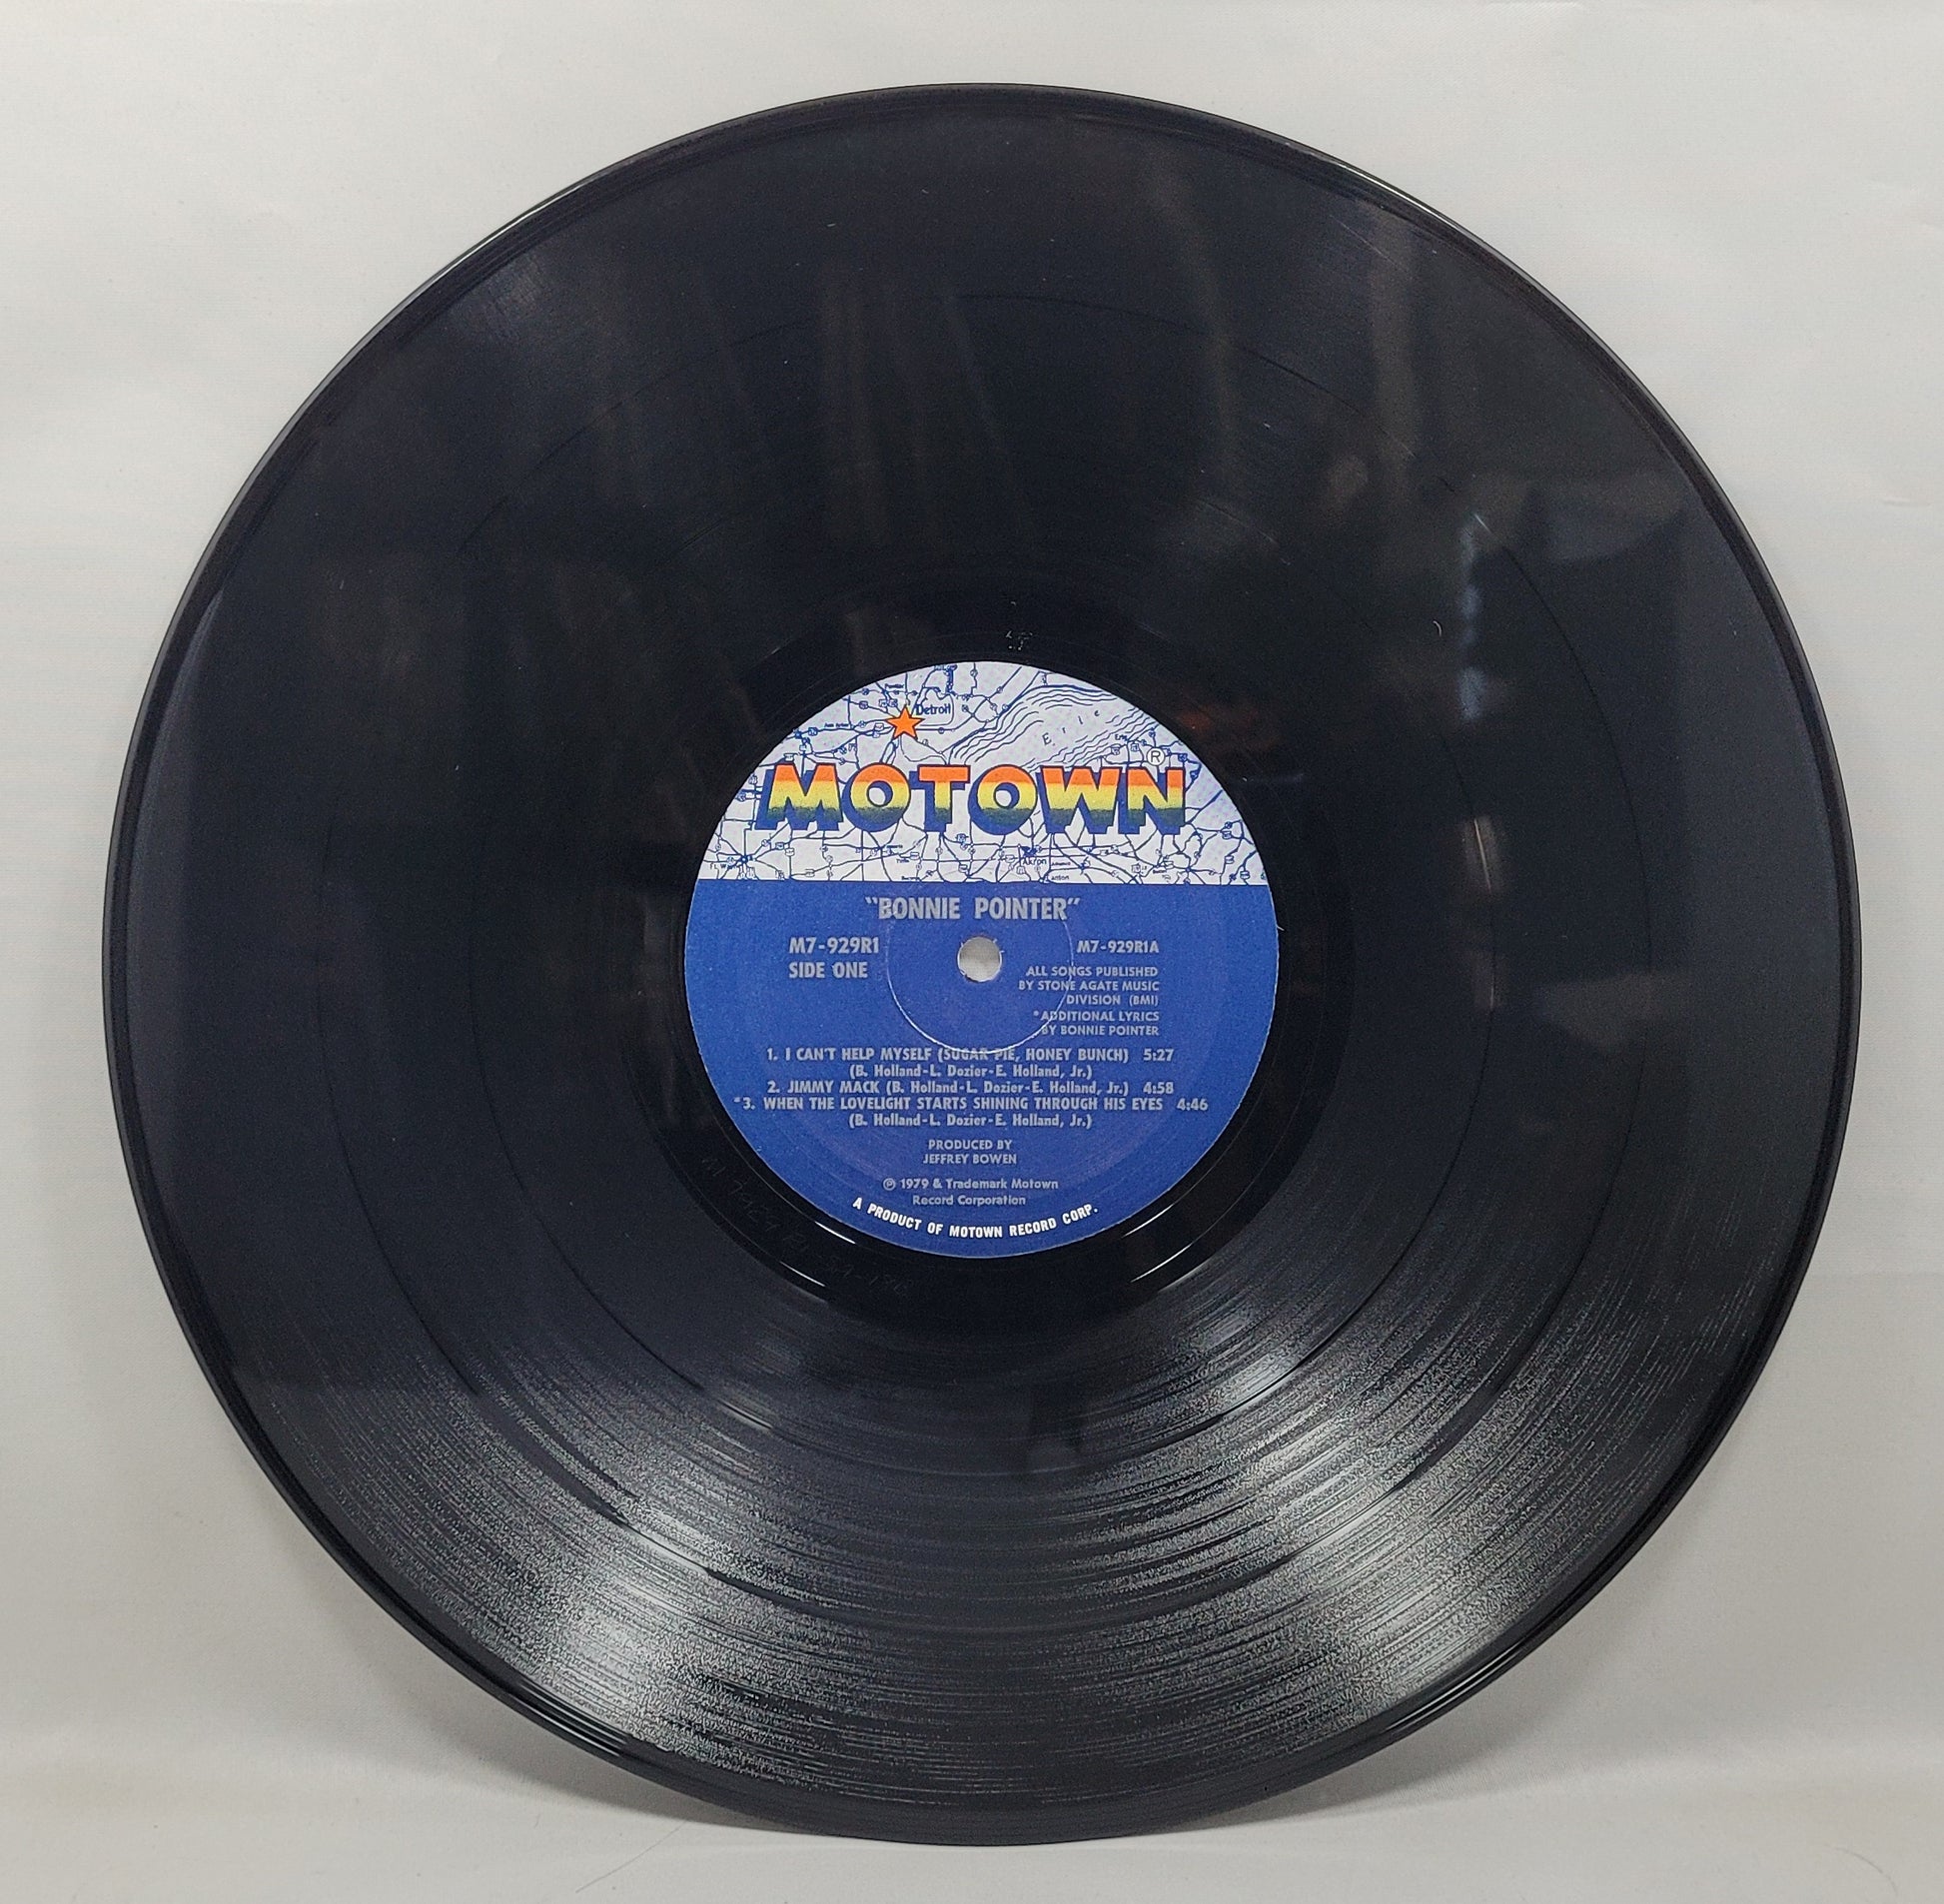 Bonnie Pointer - Bonnie Pointer [1979 Used Vinyl Record LP]